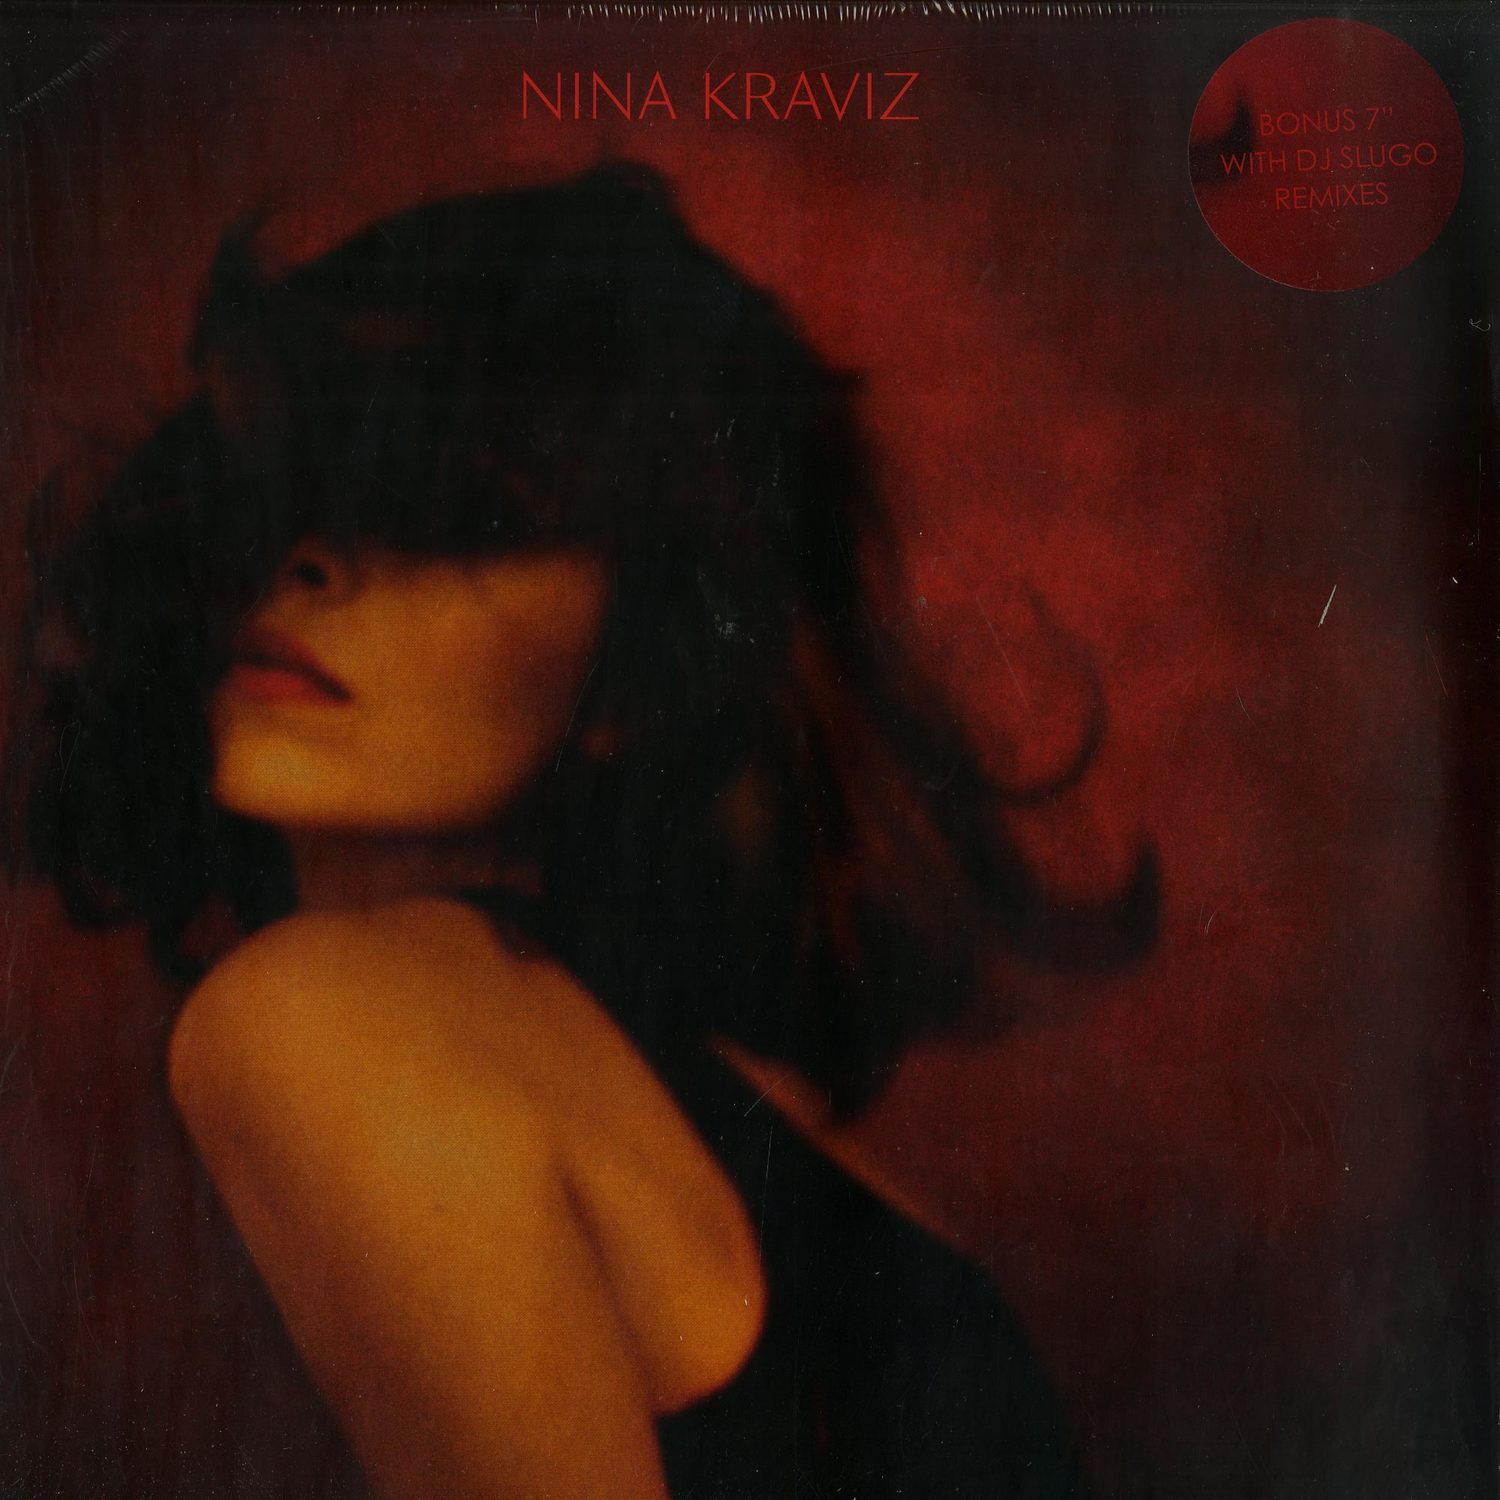 Nina Kraviz - NINA KRAVIZ 